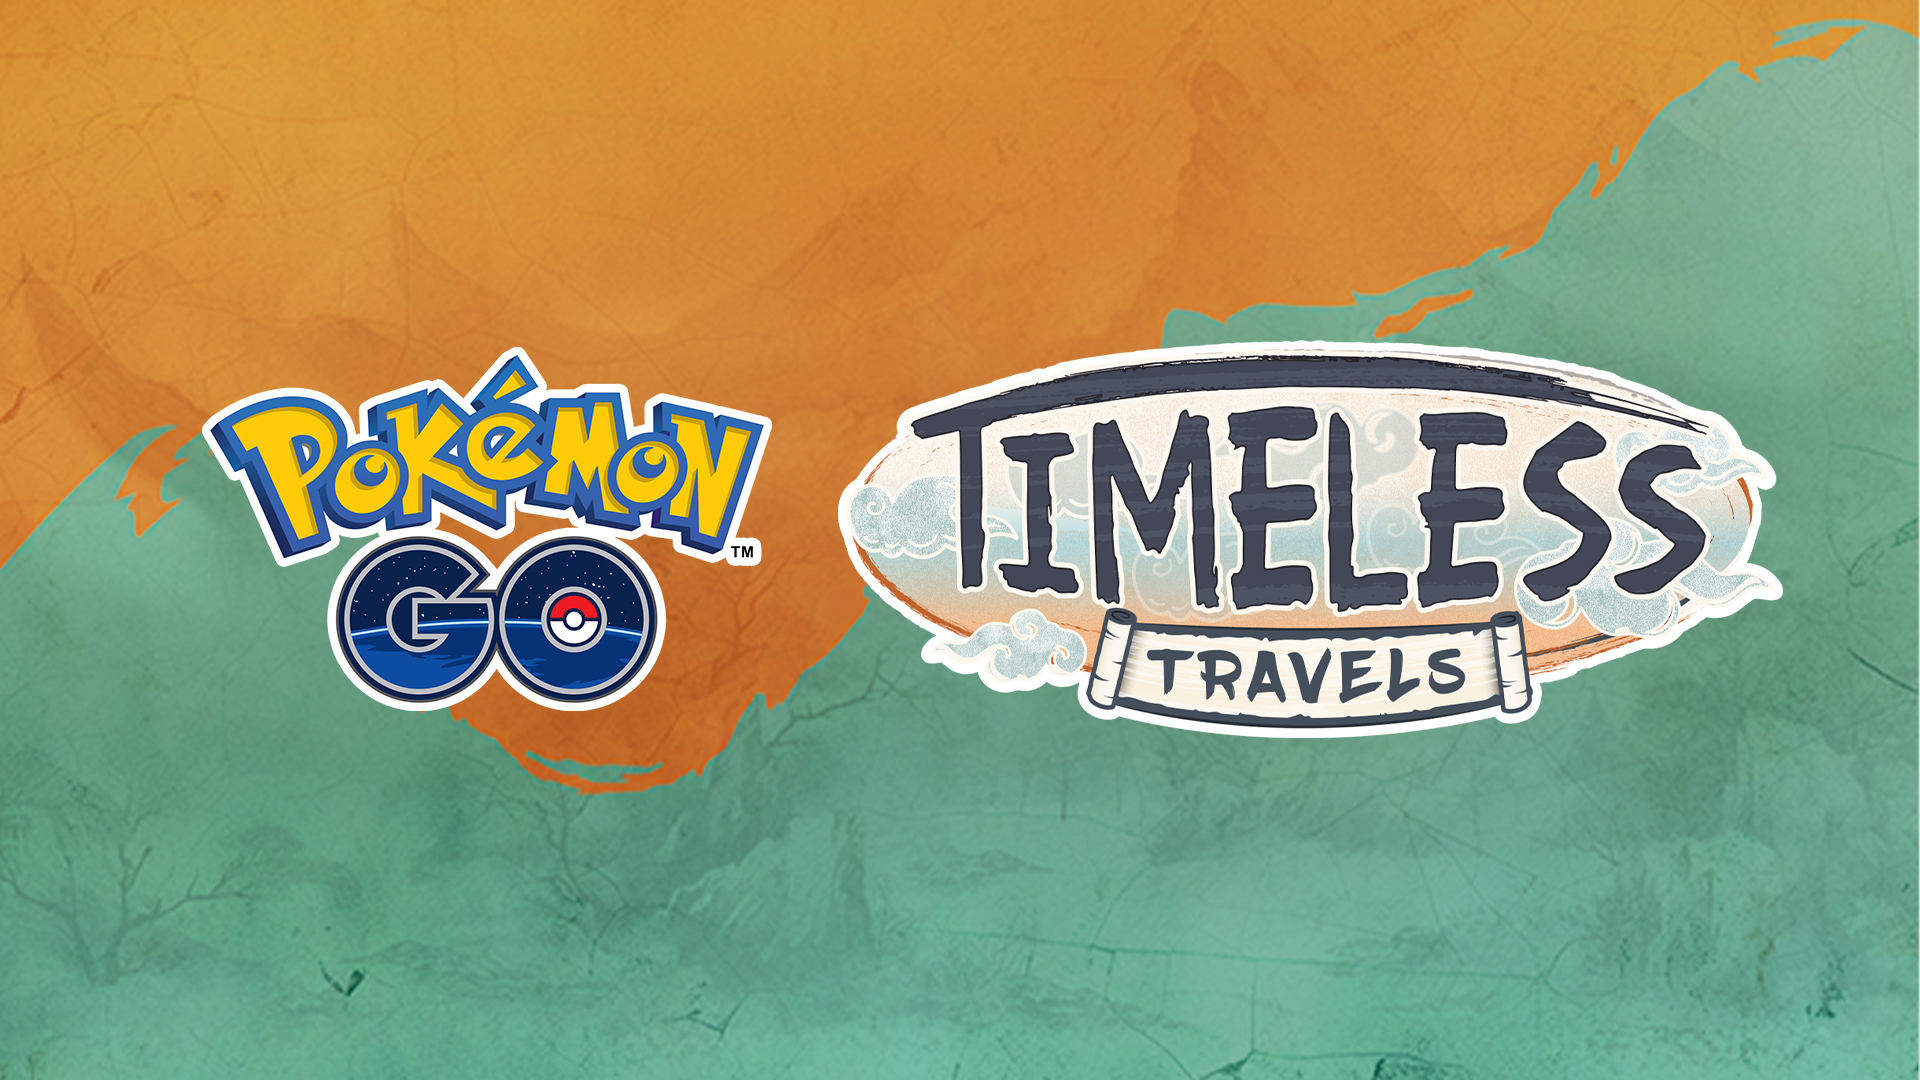 Pokémon Go Hoenn Celebration event guide: Timed Research and